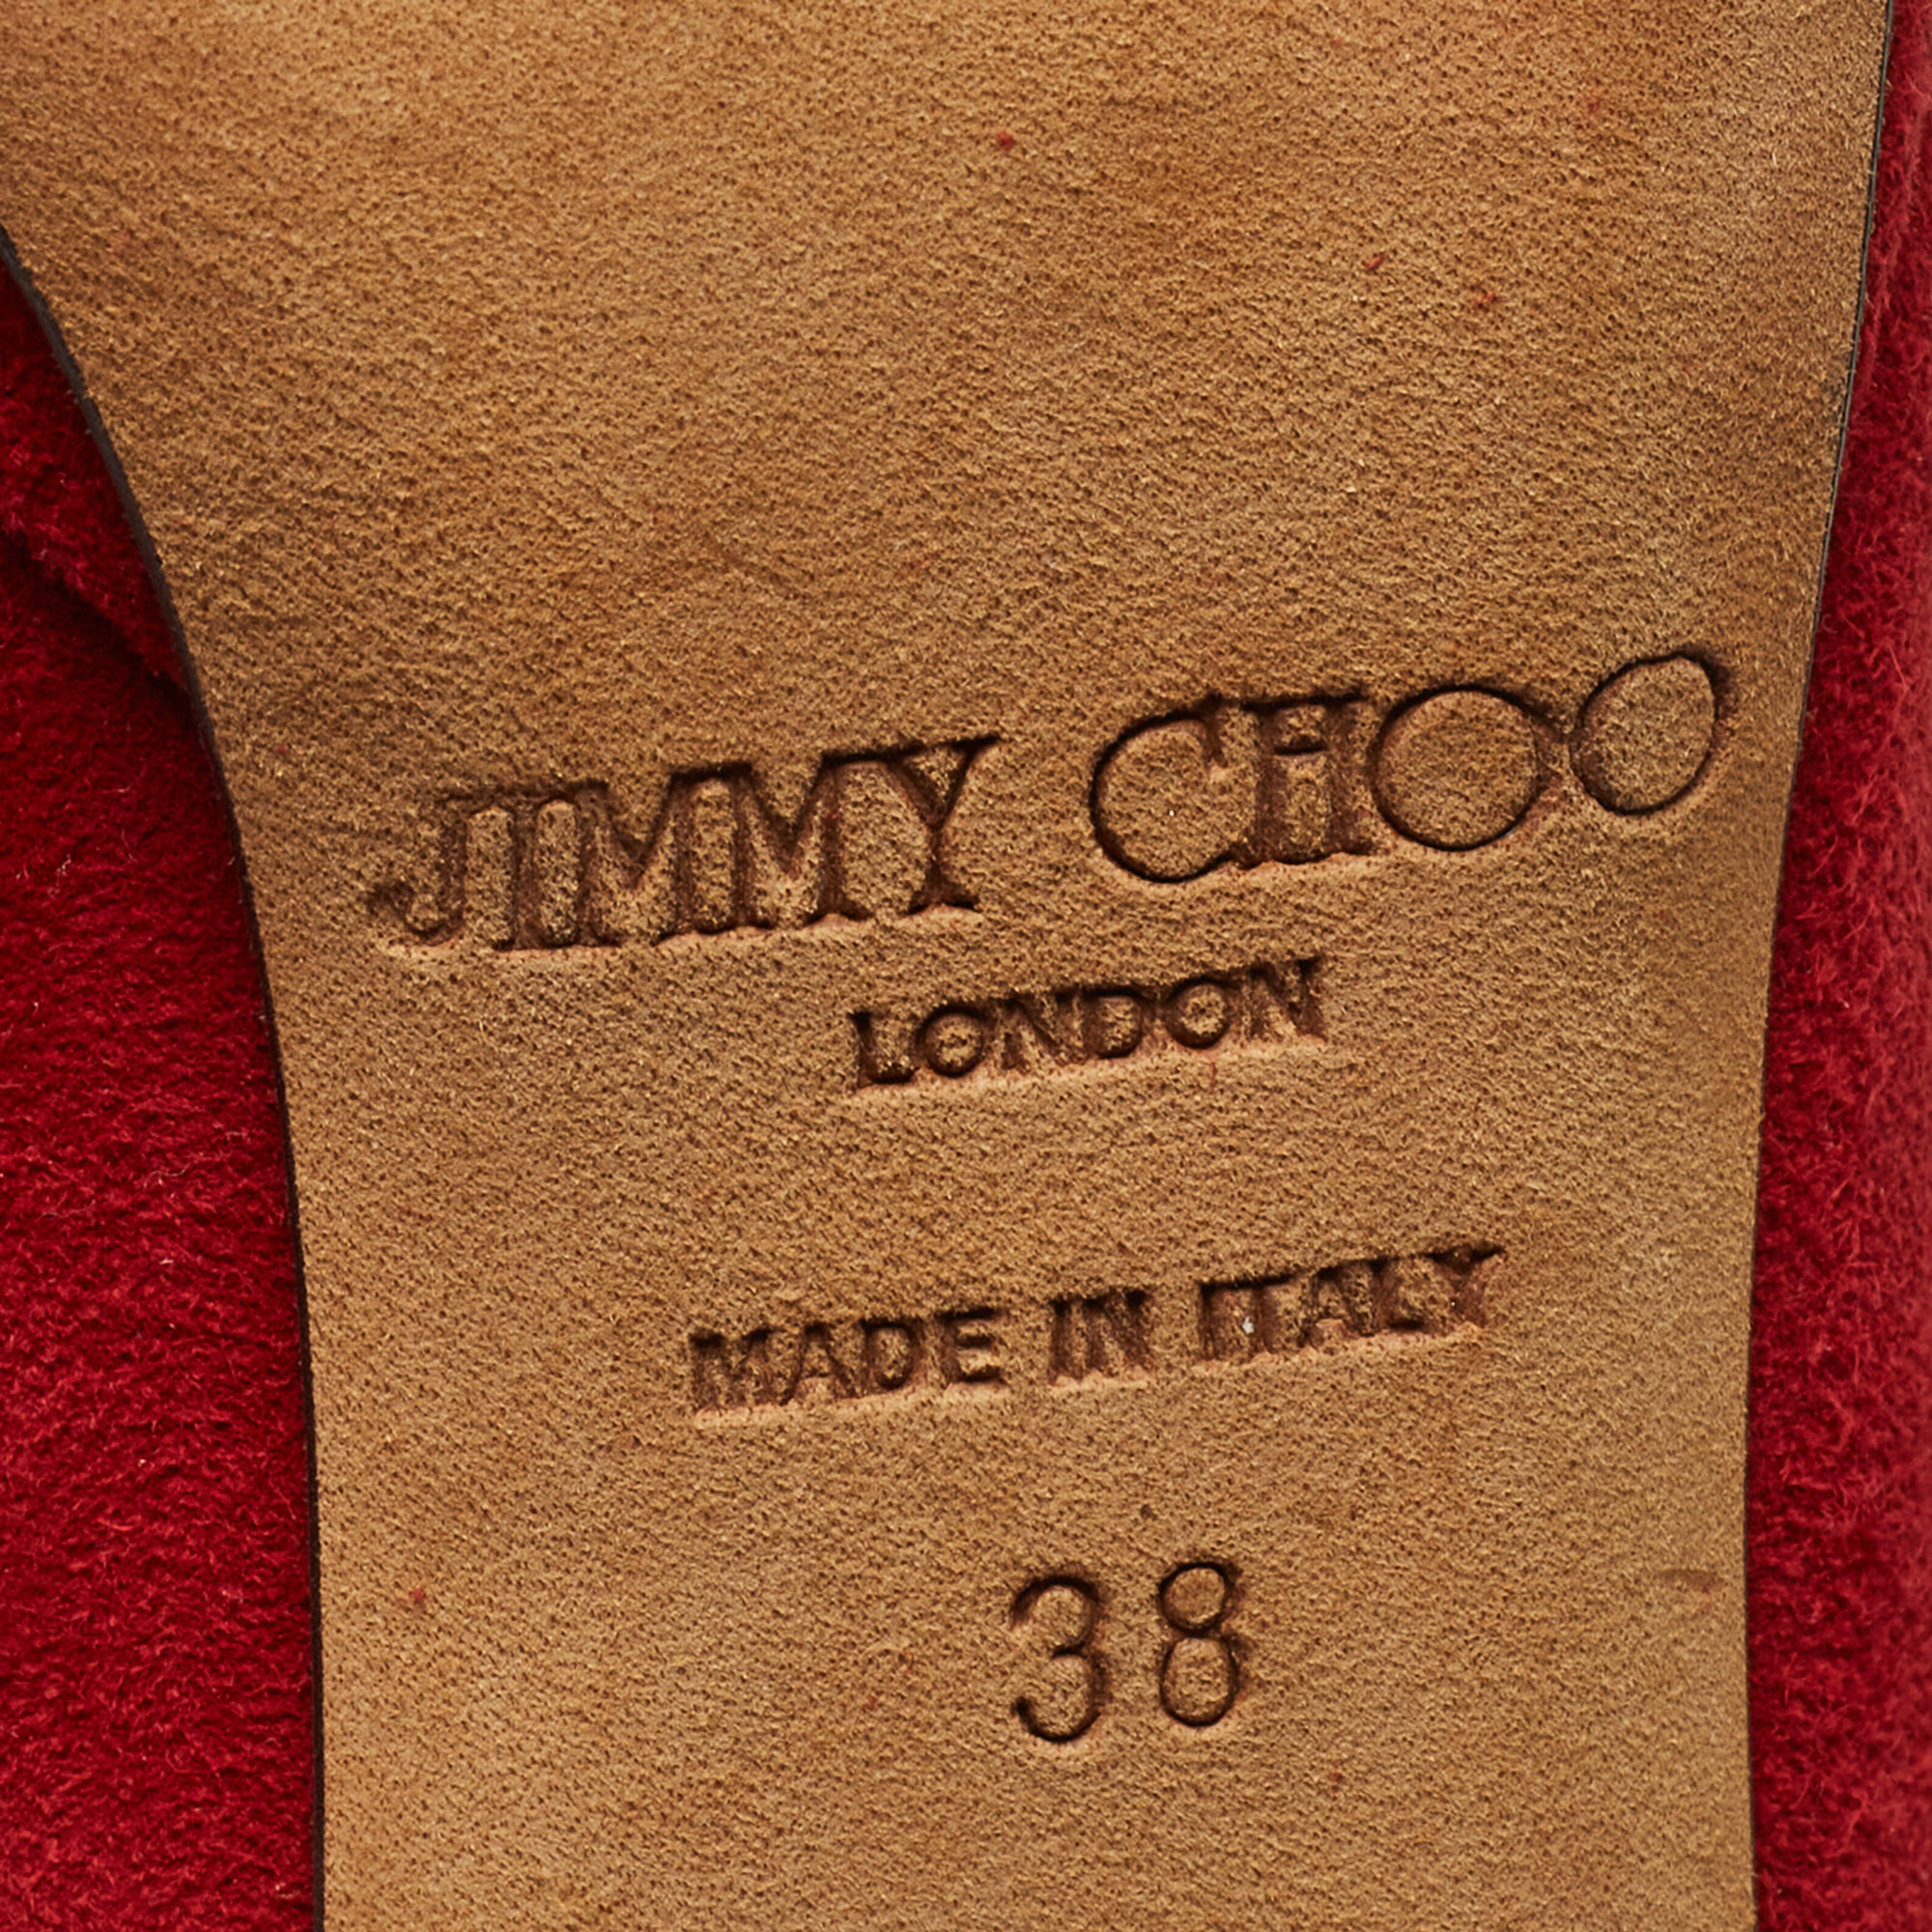 Jimmy Choo Red Suede Aimee Platform Pumps Size 38